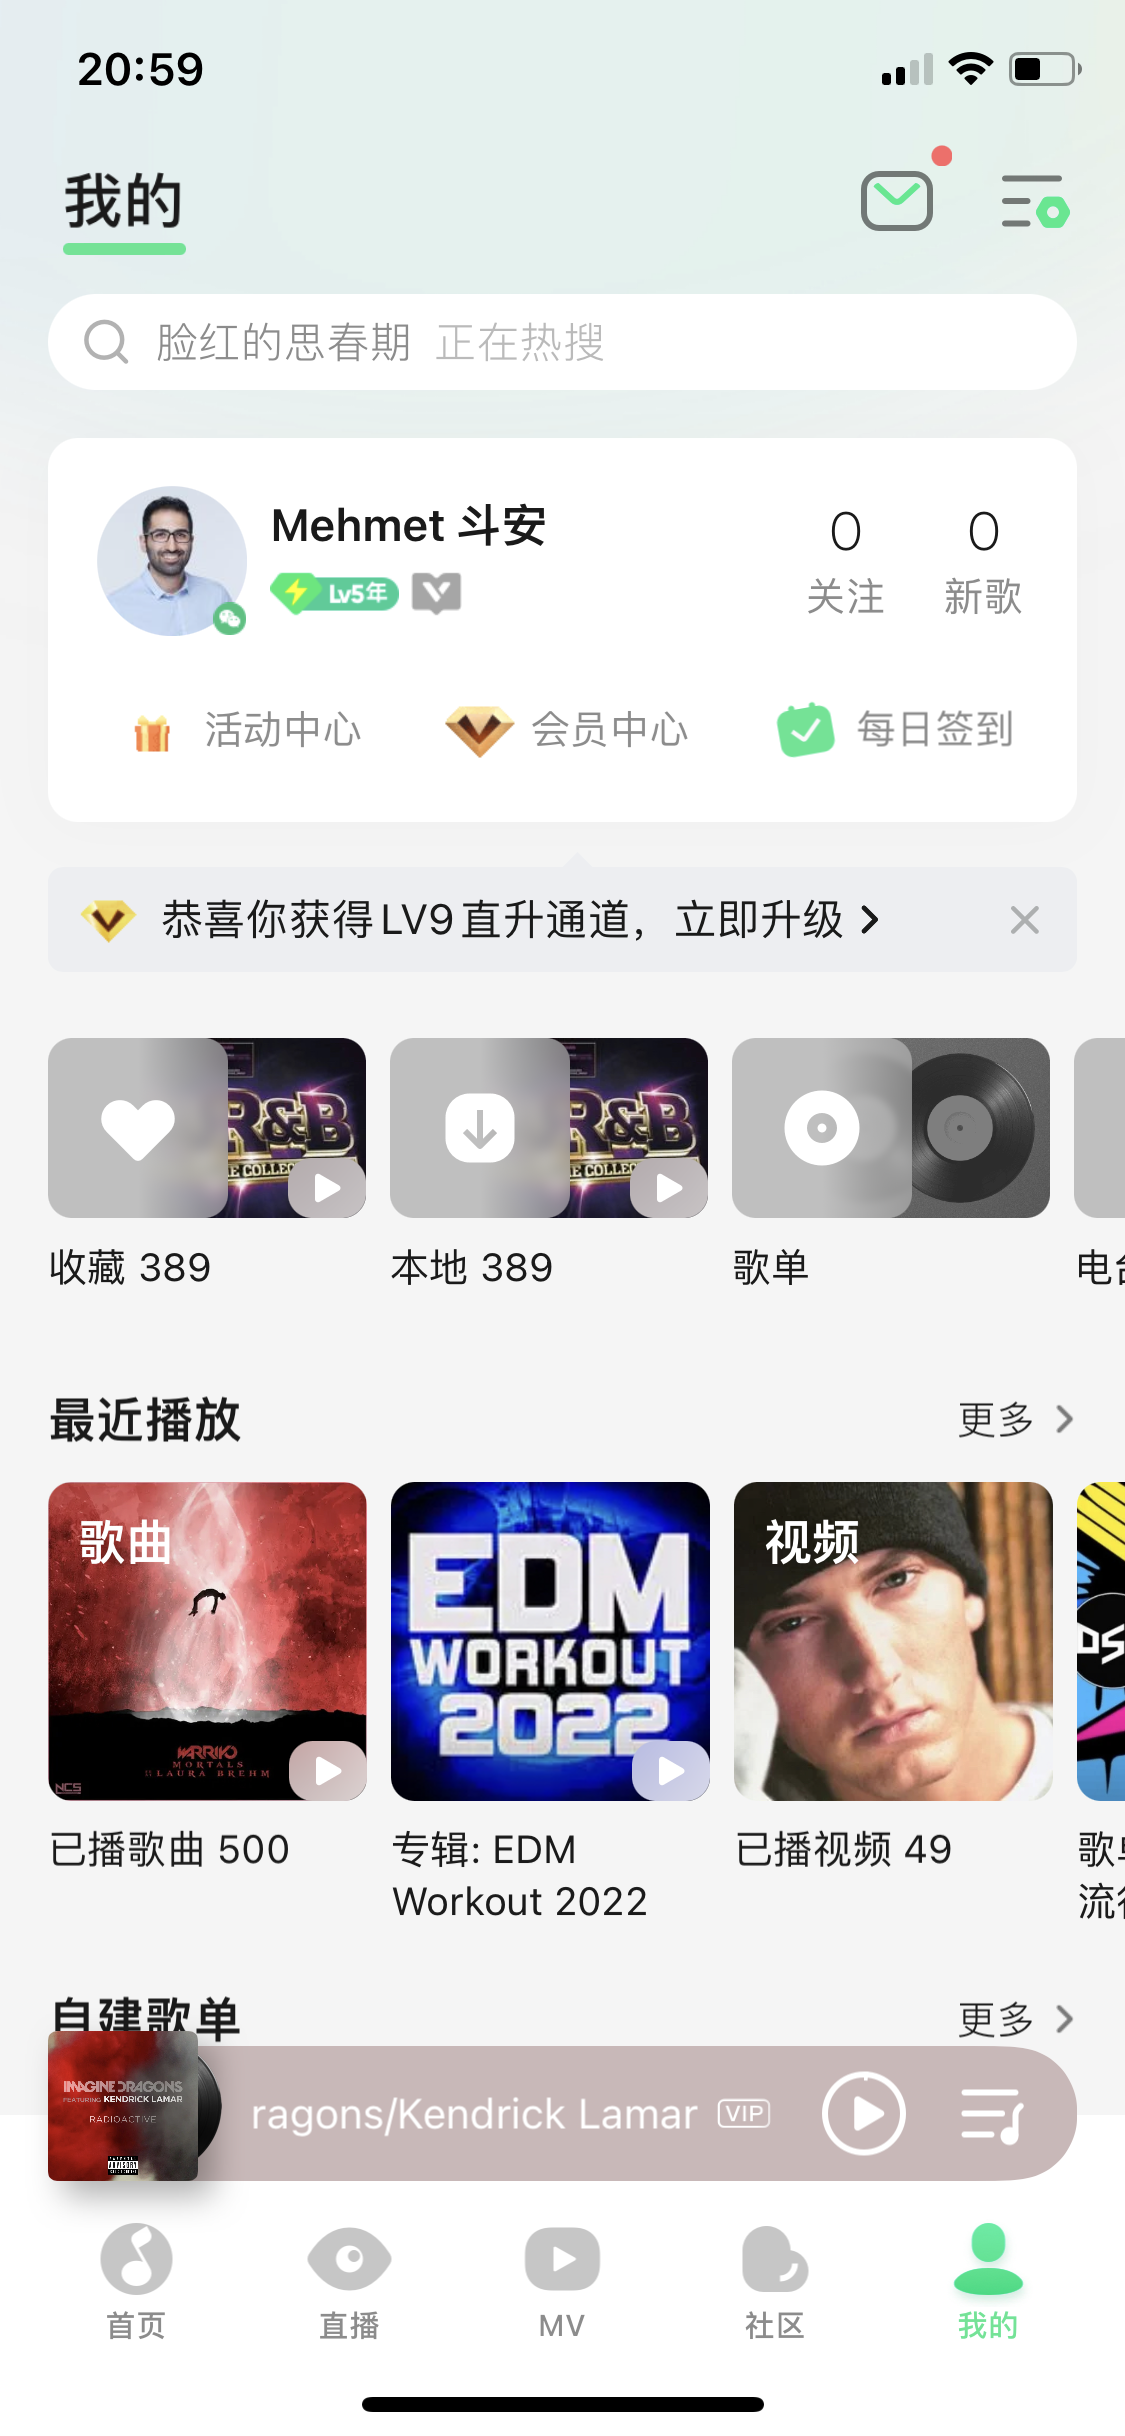 QQ chinese music app